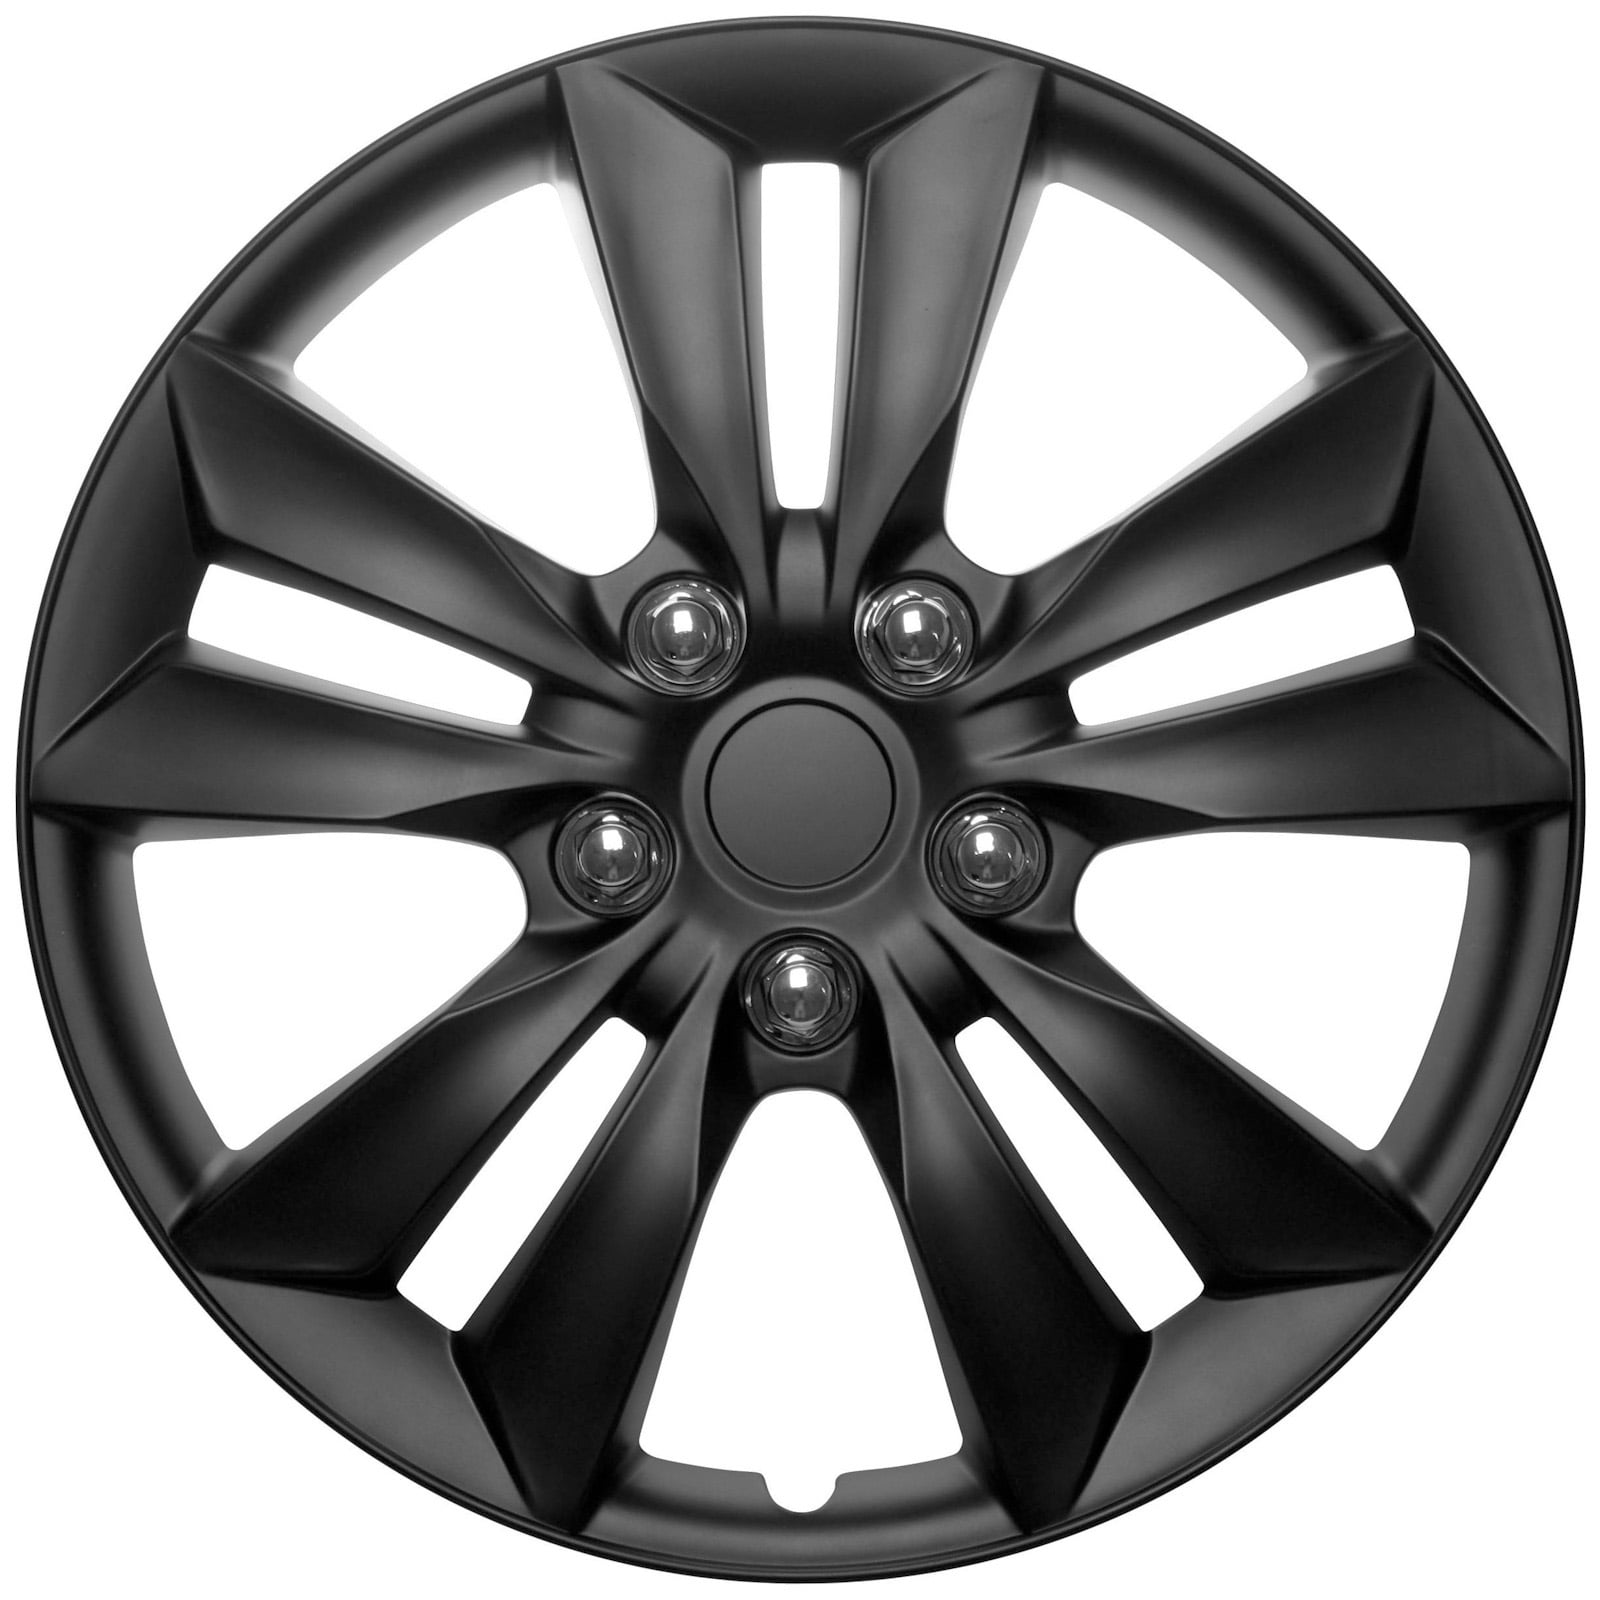 4 Pc Set of 16" Matte Black Hub Caps for OEM Steel Wheel Cover Center Cap Covers